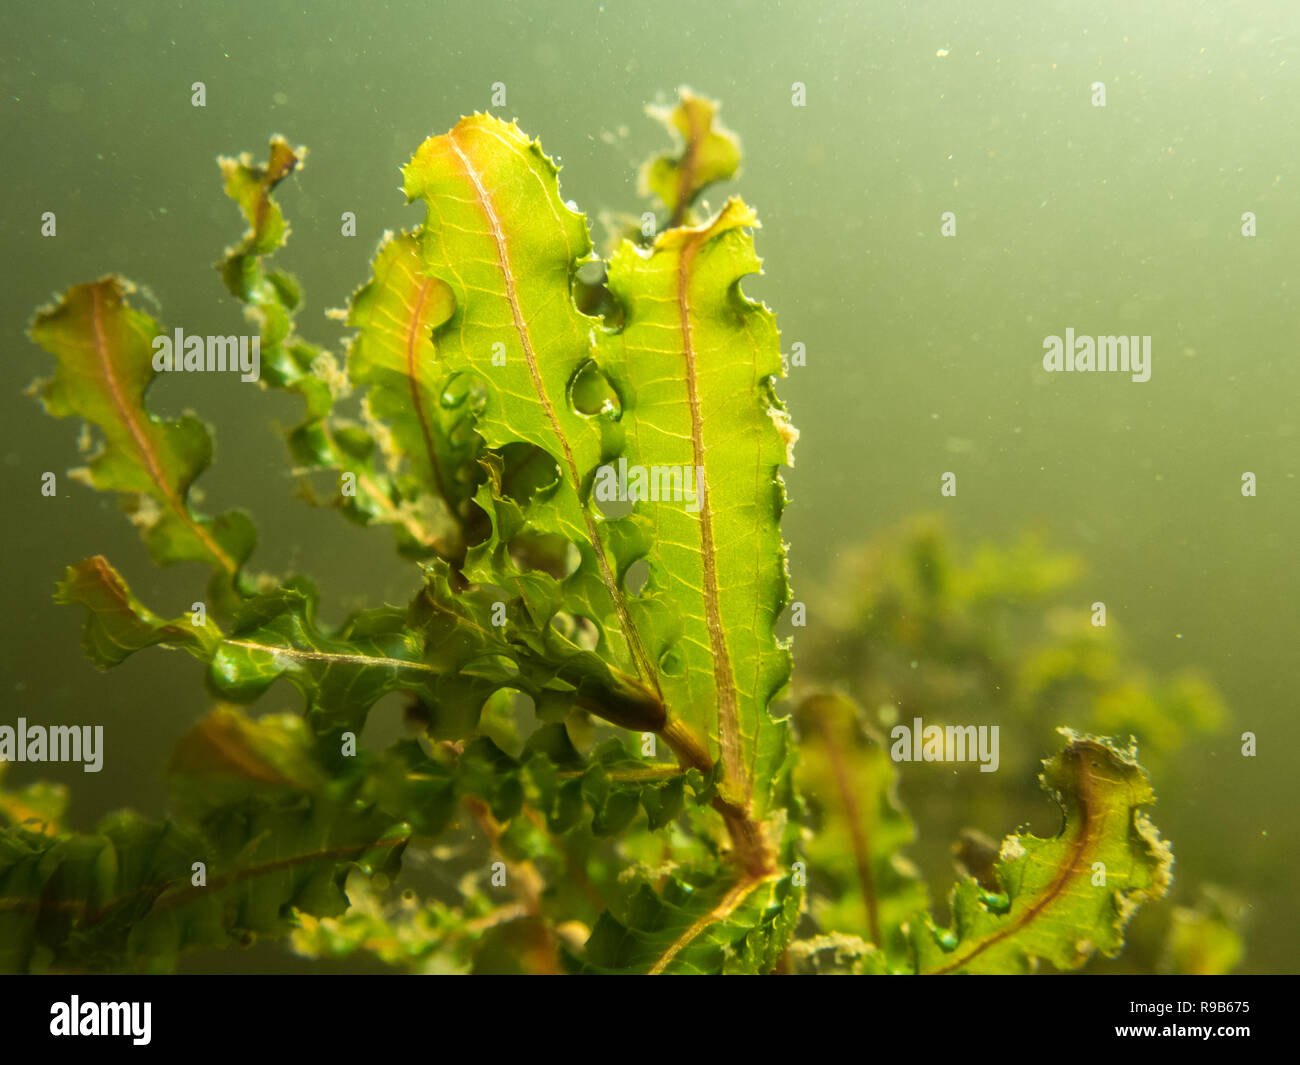 Arricciato lenticchia d'acqua (Potamogeton crispus) pianta acquatica foglie close-up shot. Foto Stock